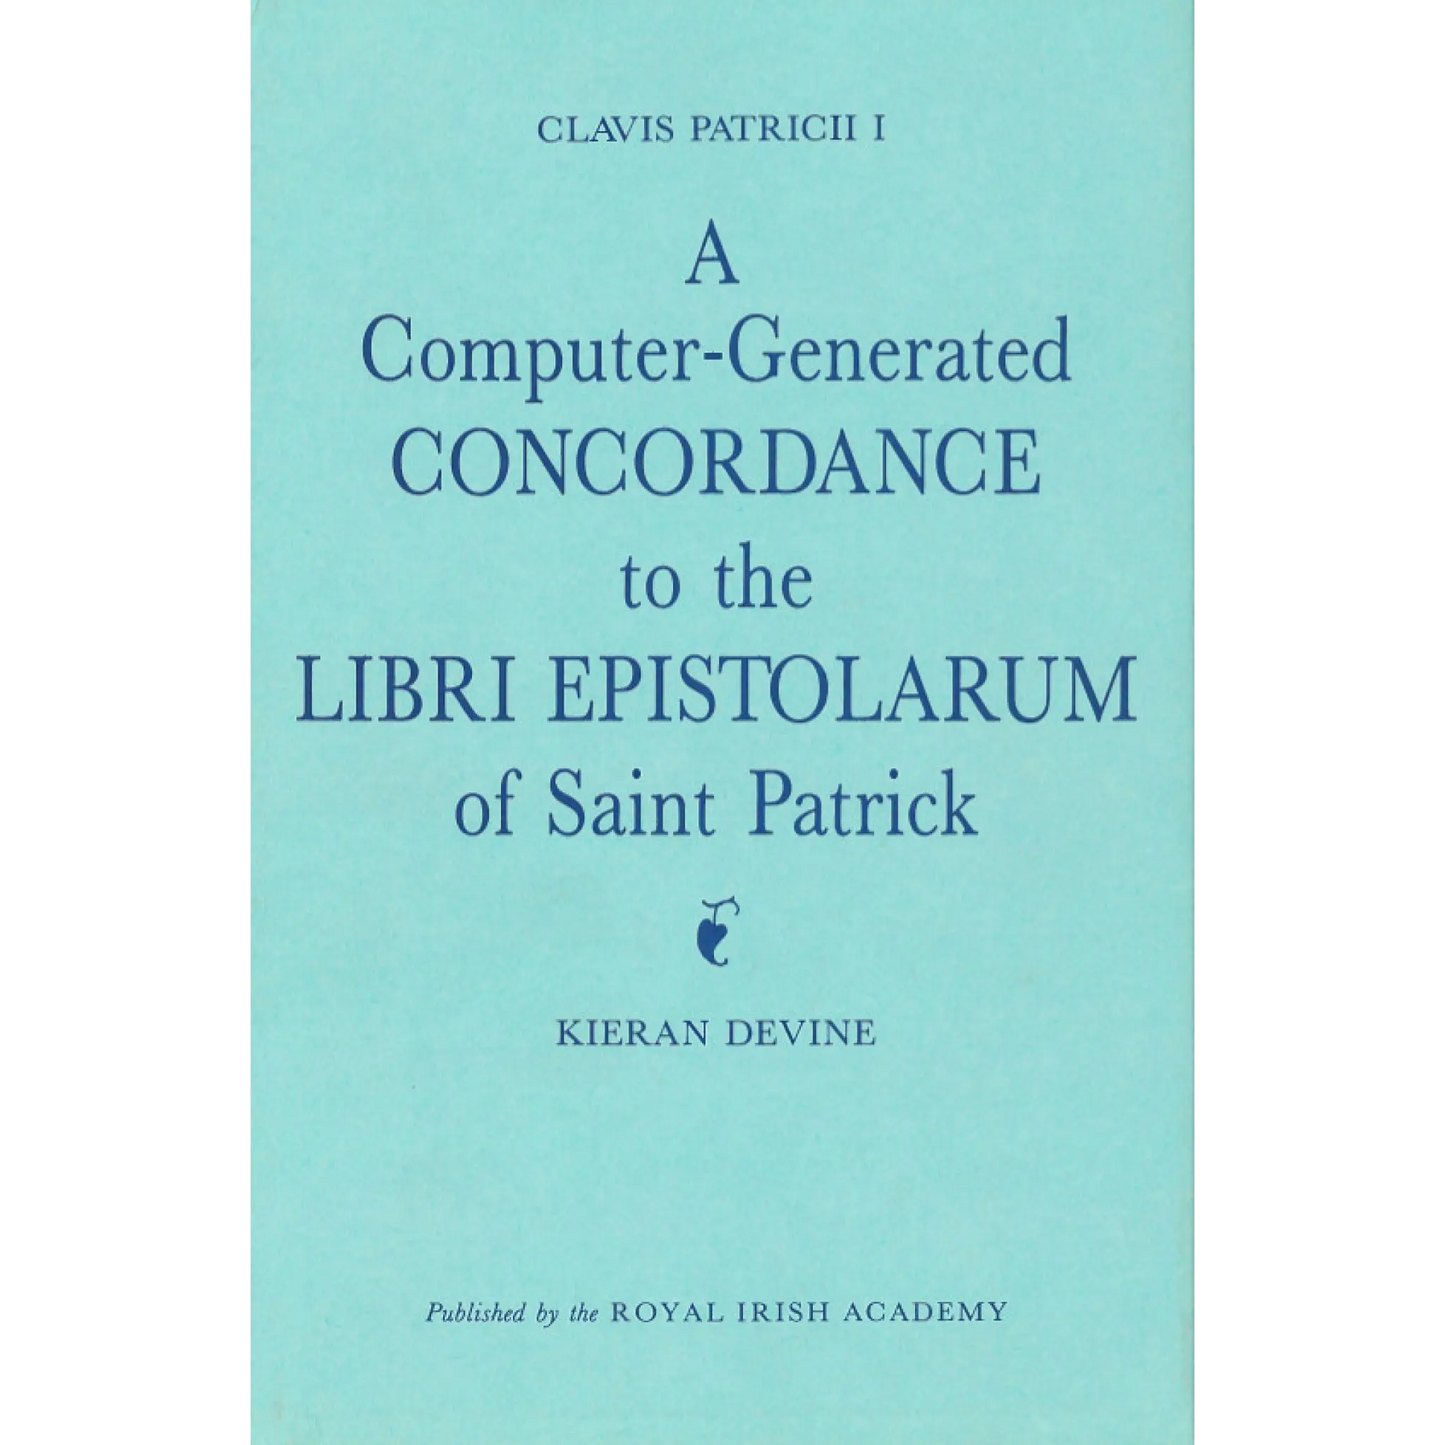 Clavis Patricii I: A Computer-Generated Concordance to the Libri Epistolarum of St Patrick